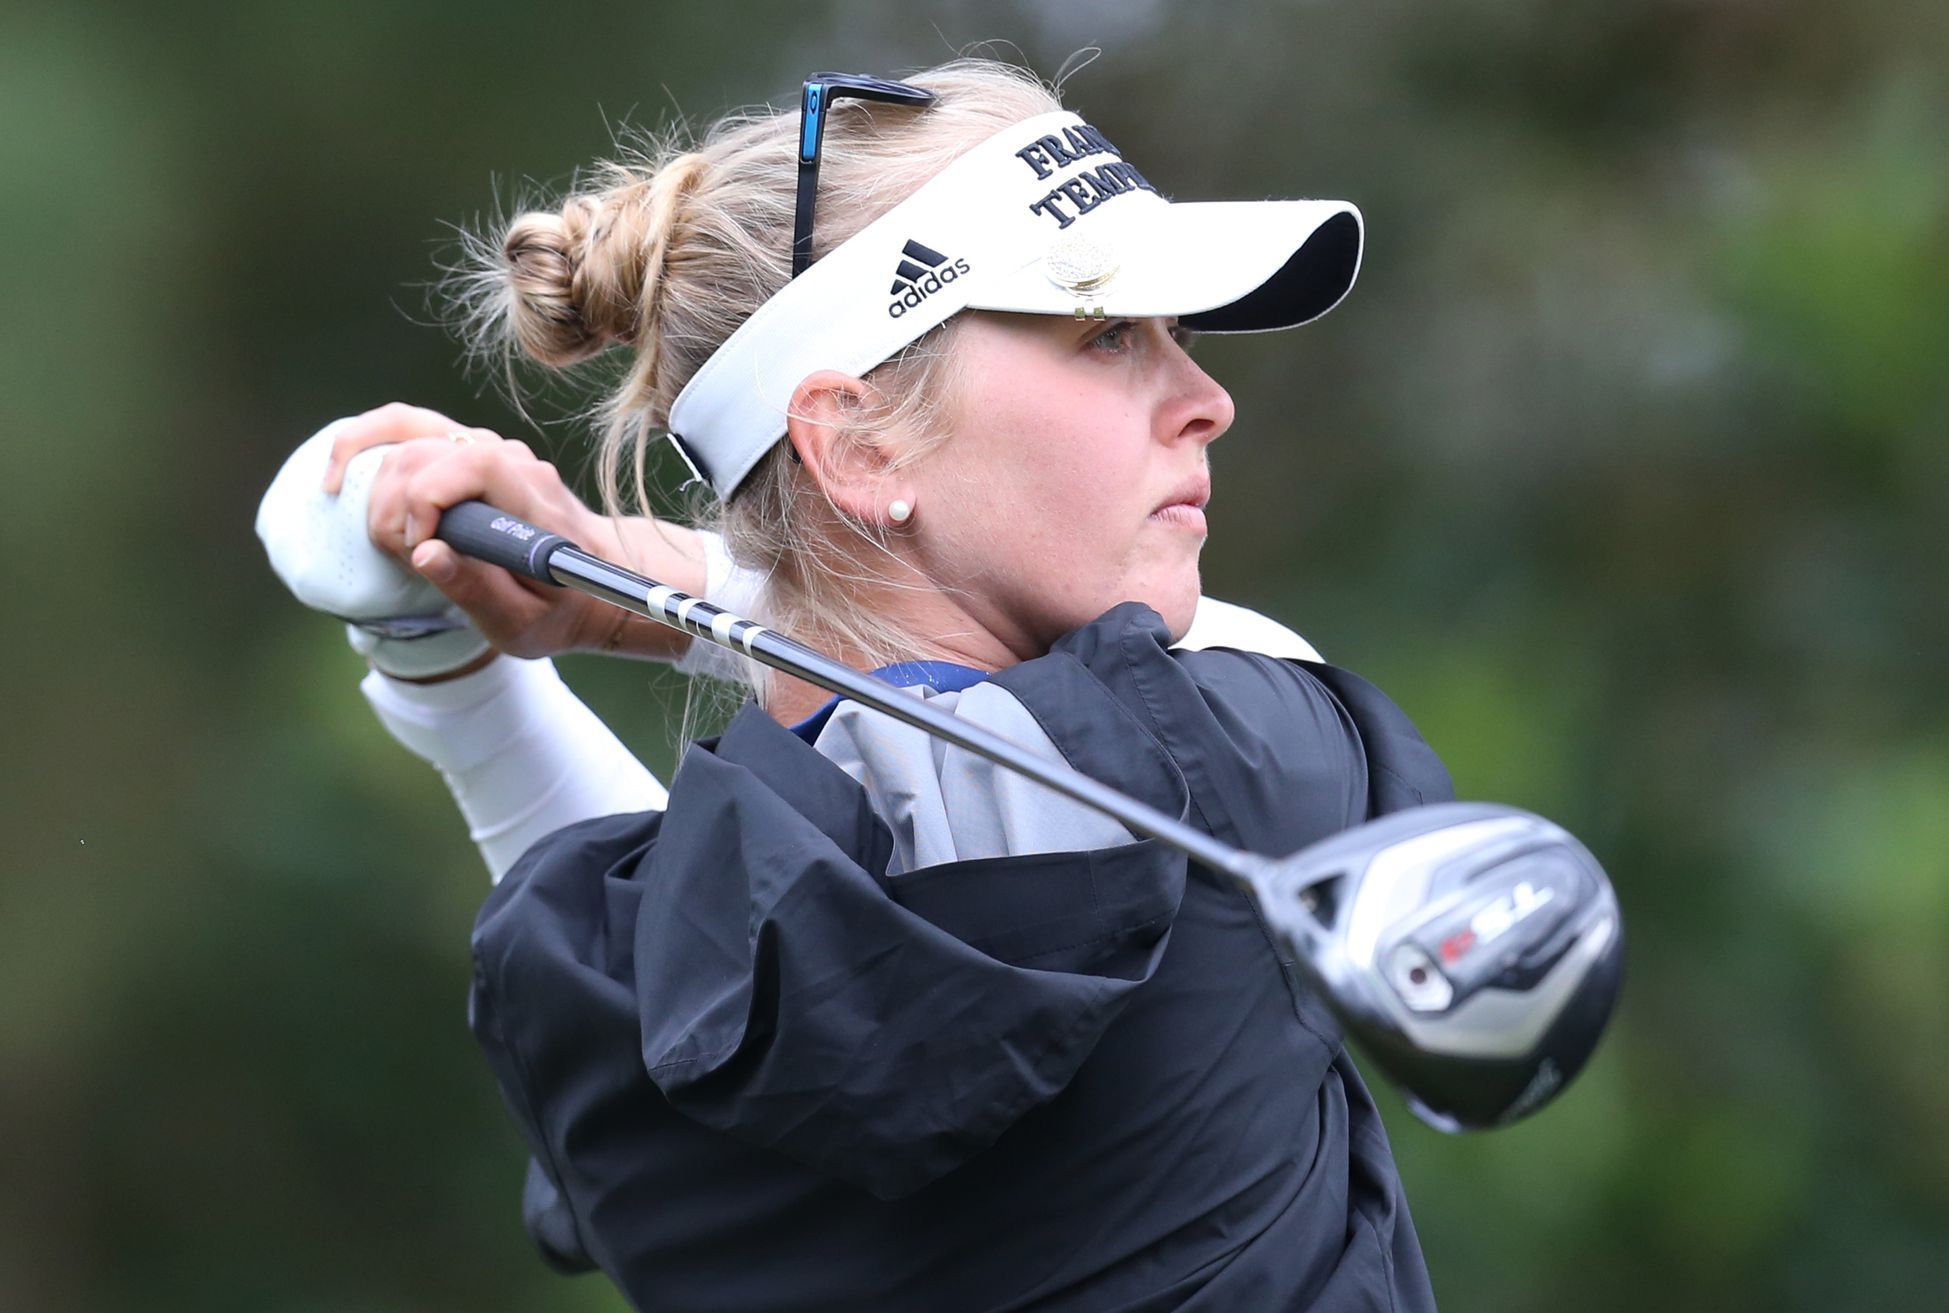 golf, Jessica Kordová, LPGA: U.S. Women's Open - Second Round